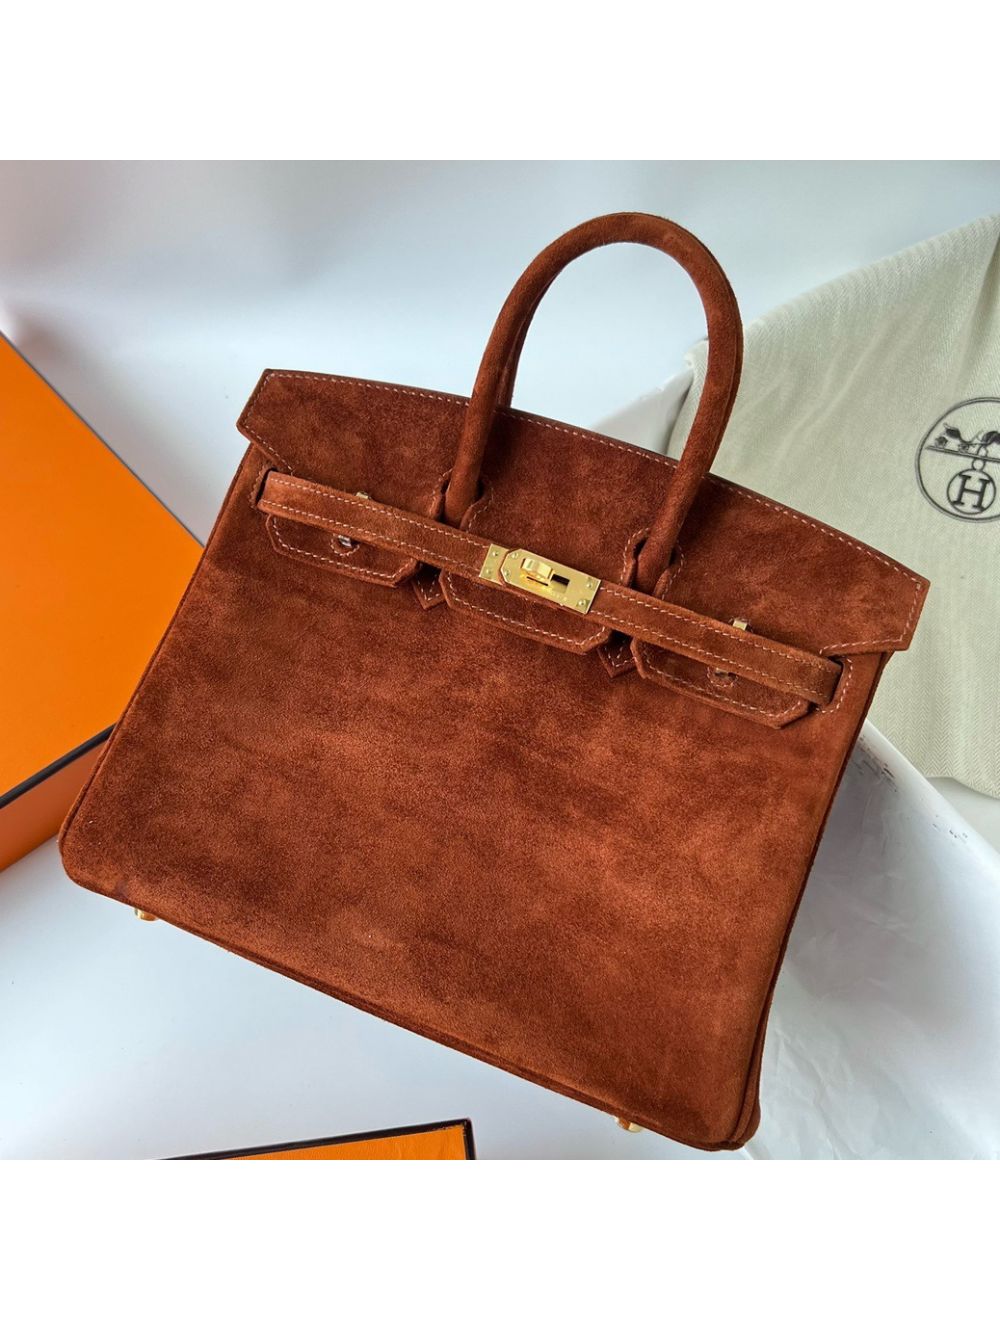 Replica Hermes Birkin 25 Retourne Handmade Bag In Brown Doblis Suede Leather